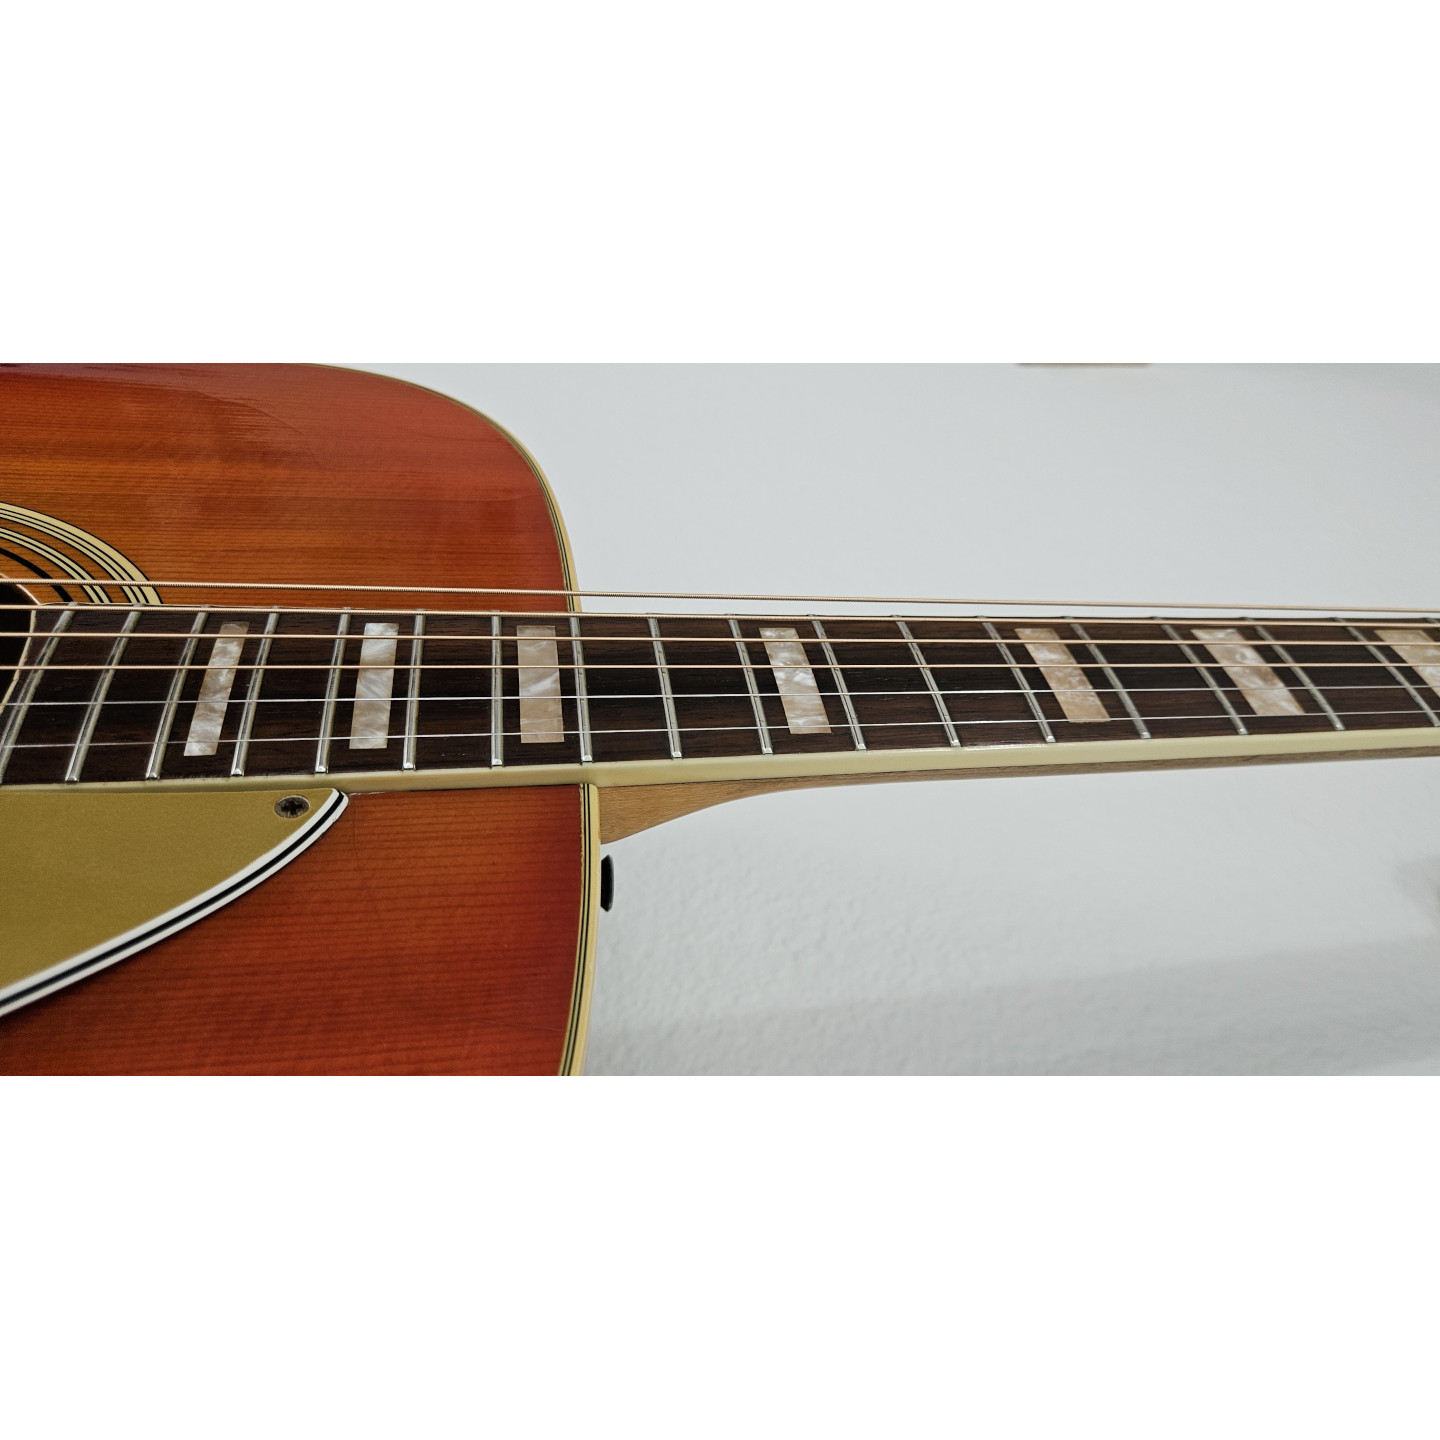 1966 Fender Kingman Sunburst Vintage Dreadnought Acoustic Guitar